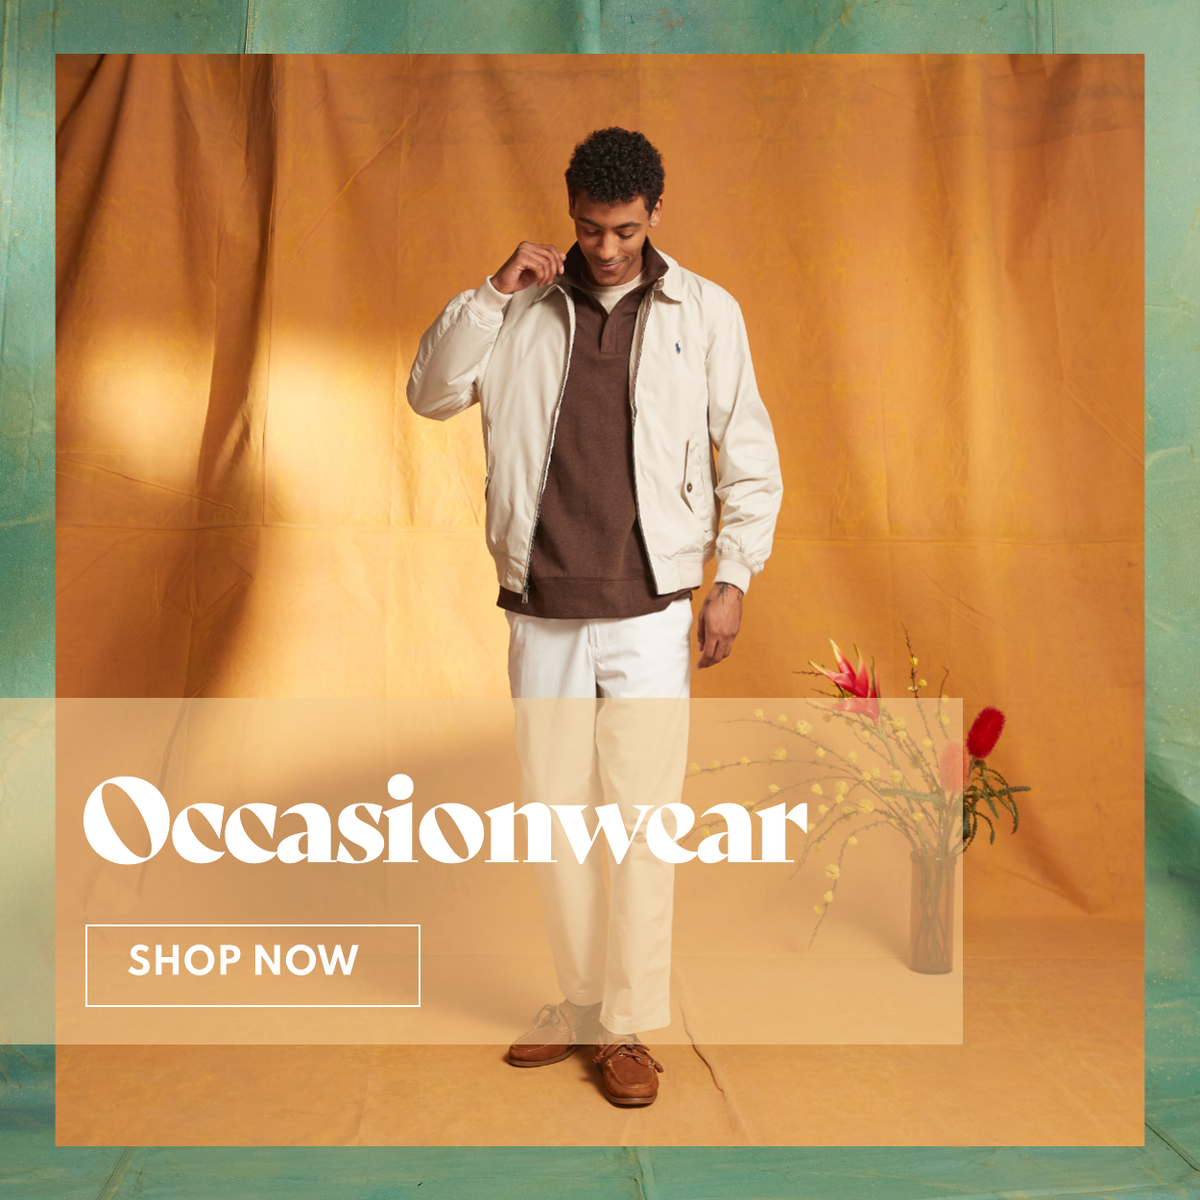 Occassionwear Shop Now